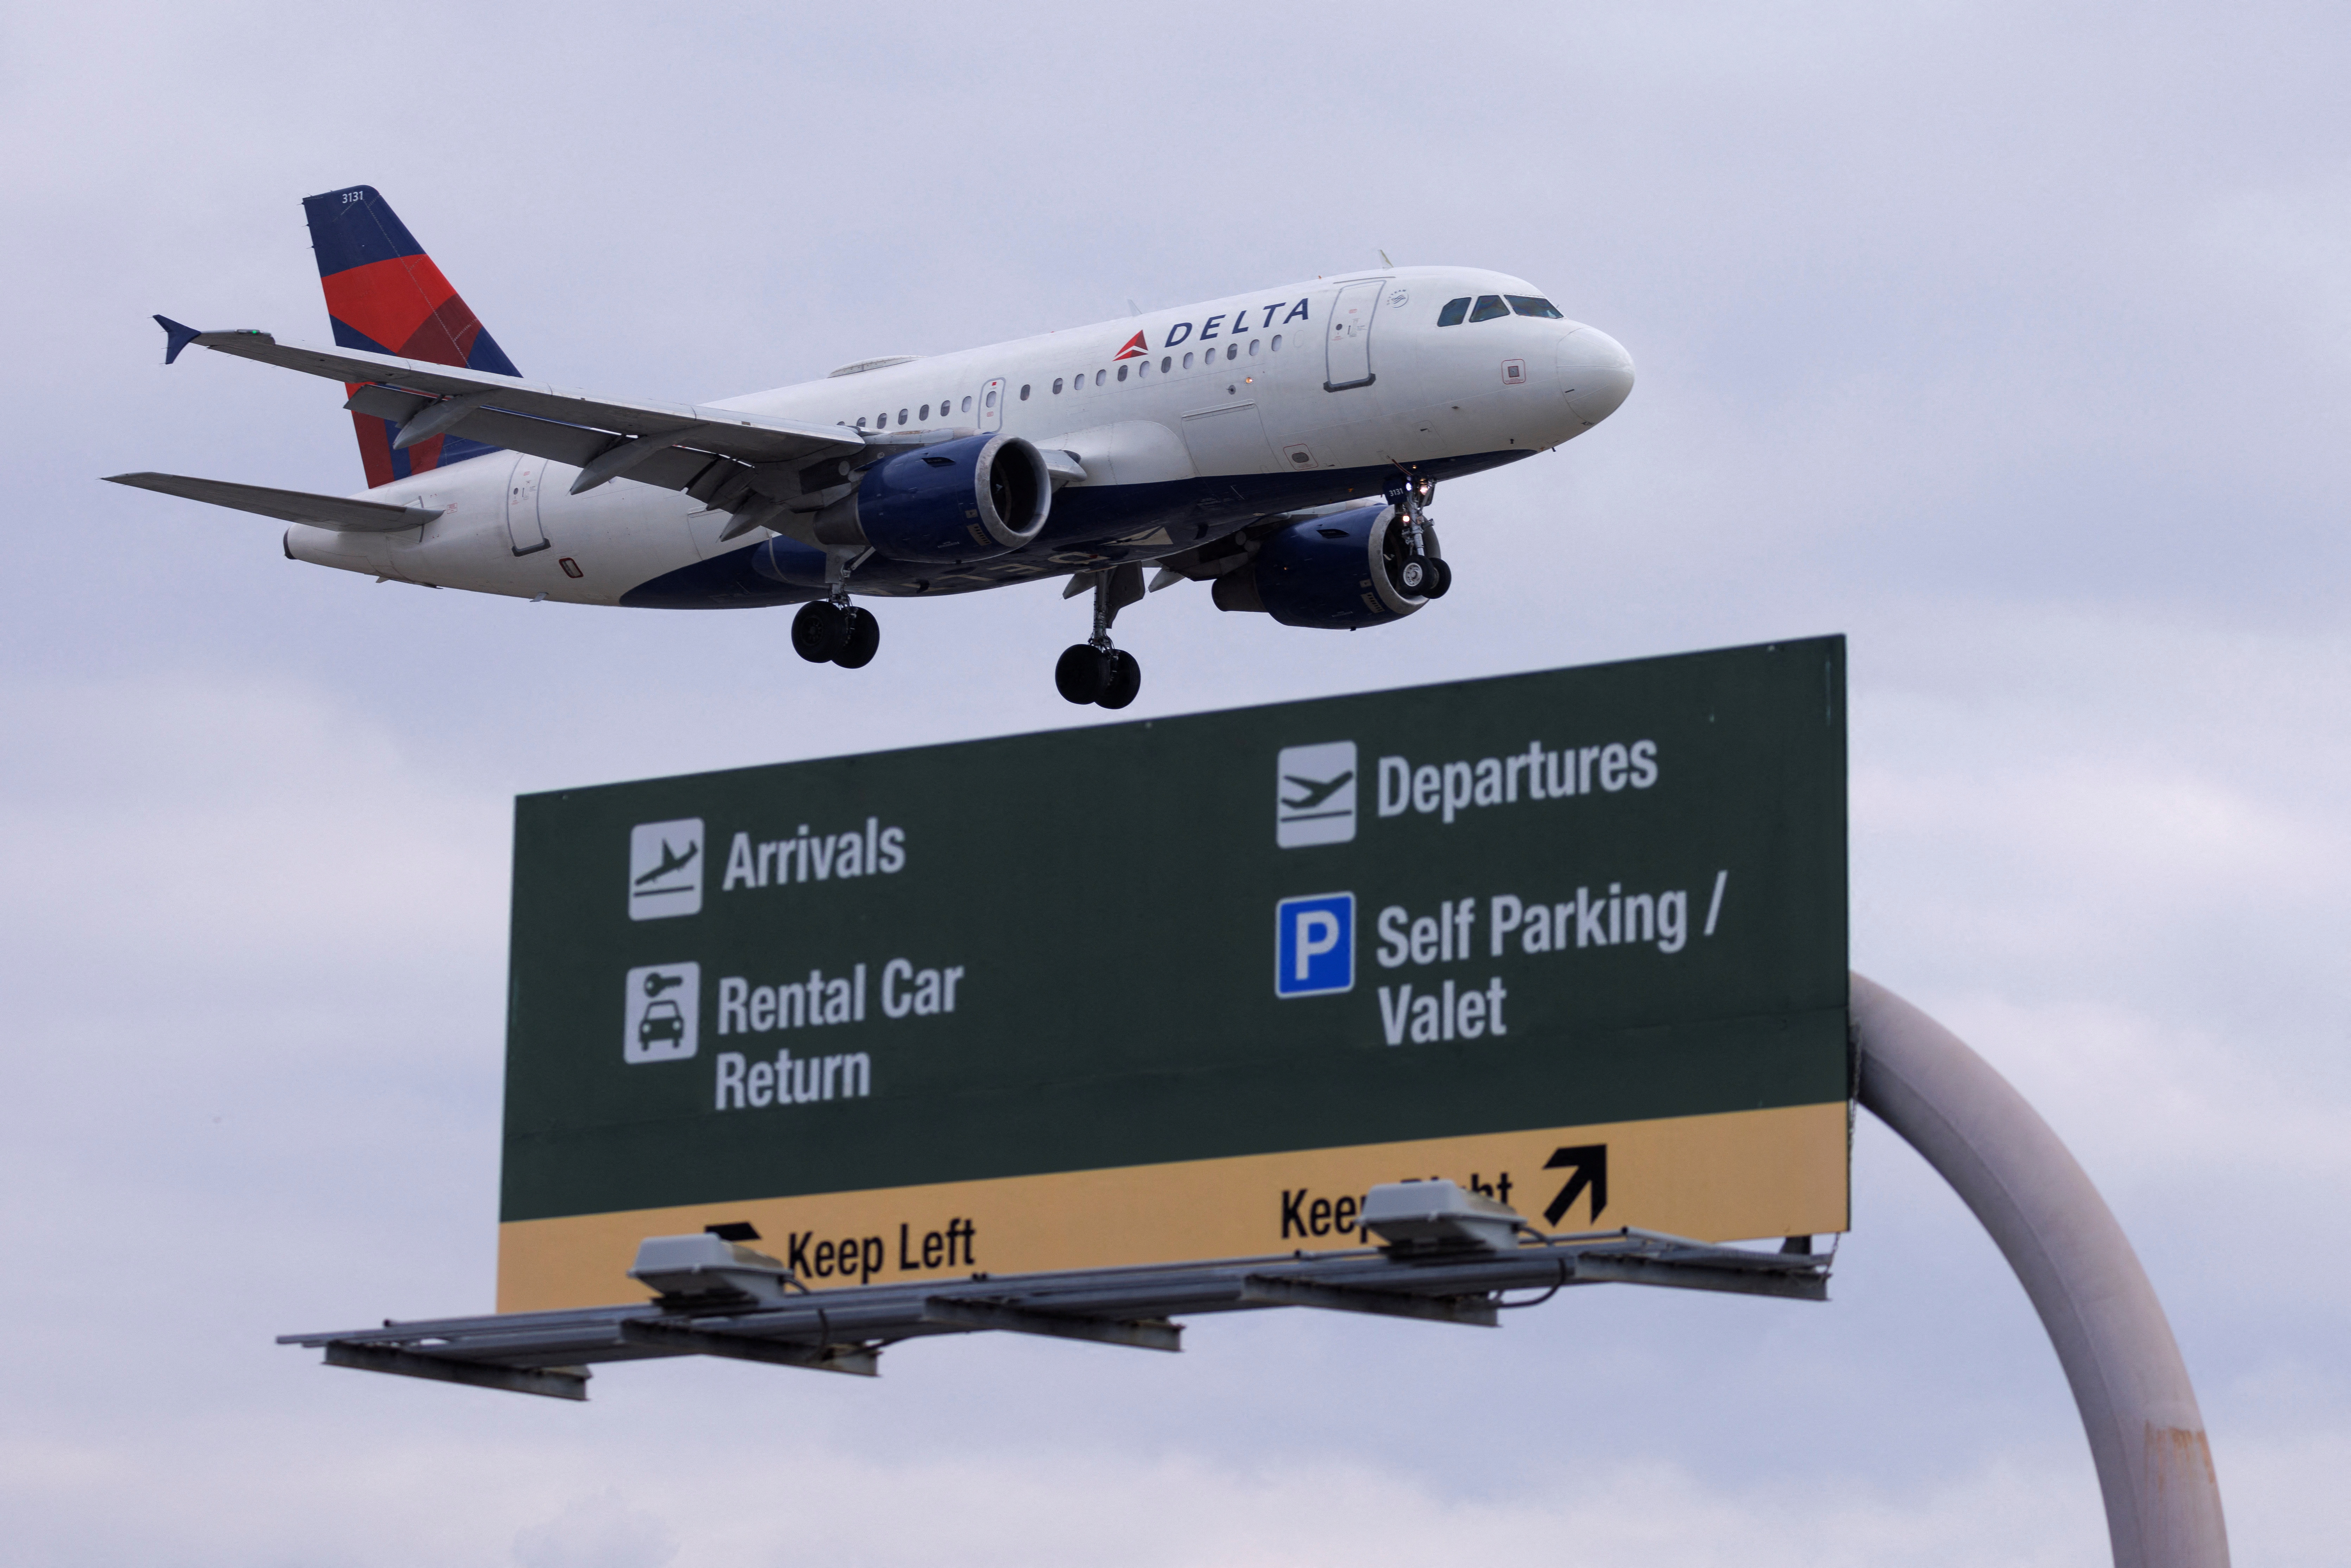 A Delta Air Lines commercial aircraft approaches to land at John Wayne airport in Santa Ana, California